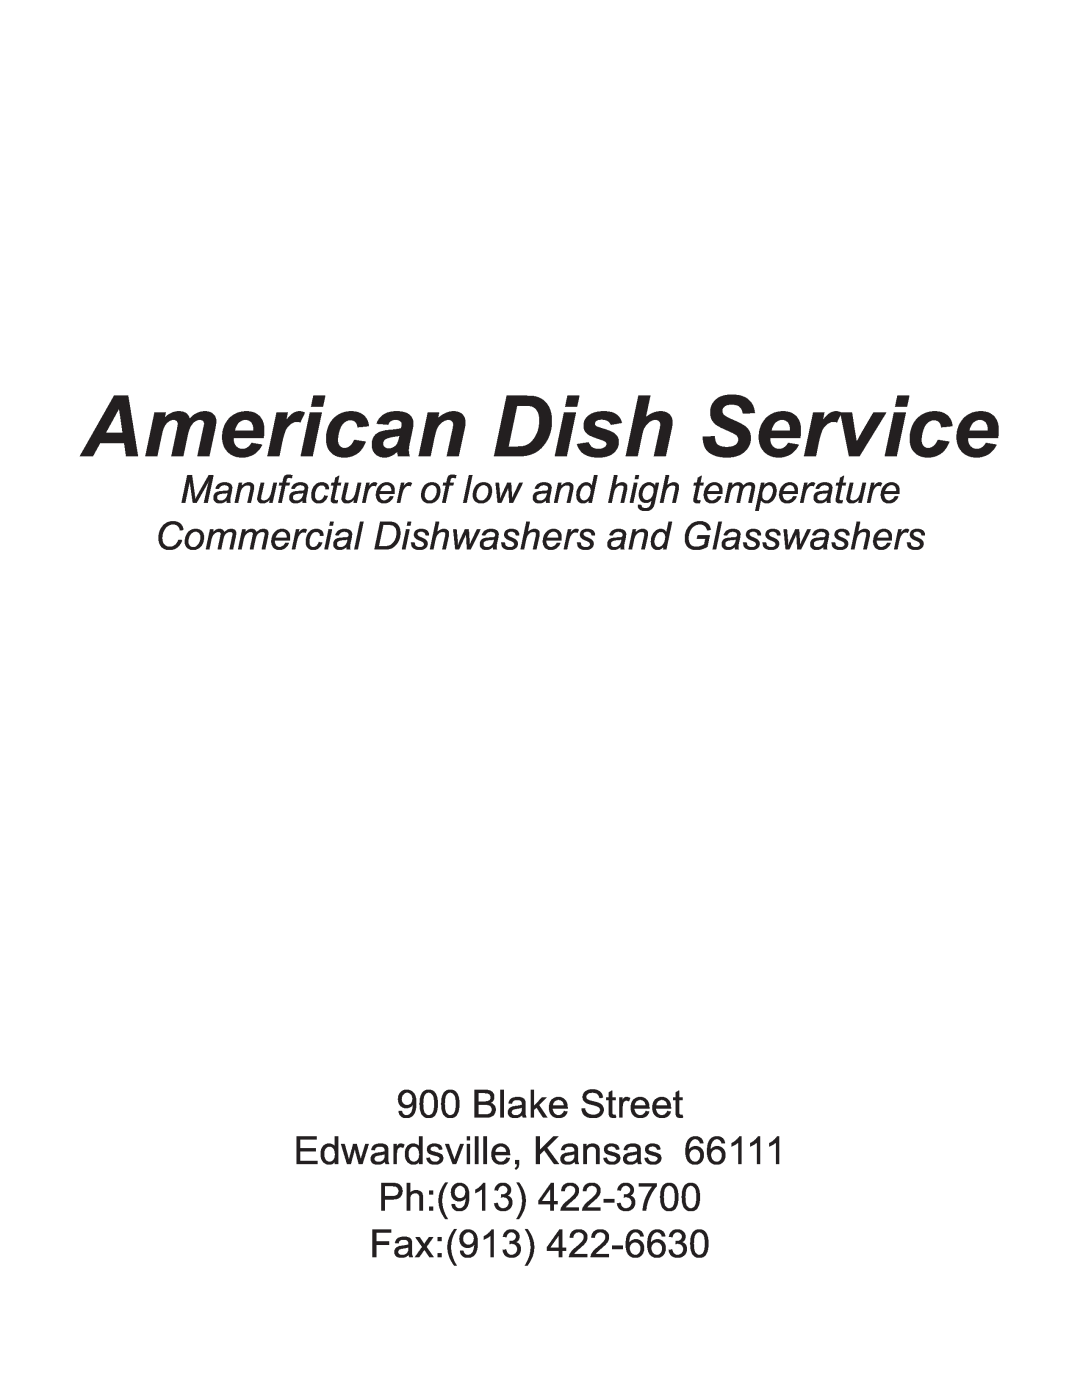 American Dish Service ADC-66 L-R/R-L manual American Dish Service, Blake Street Edwardsville, Kansas Ph:913, Fax:913 